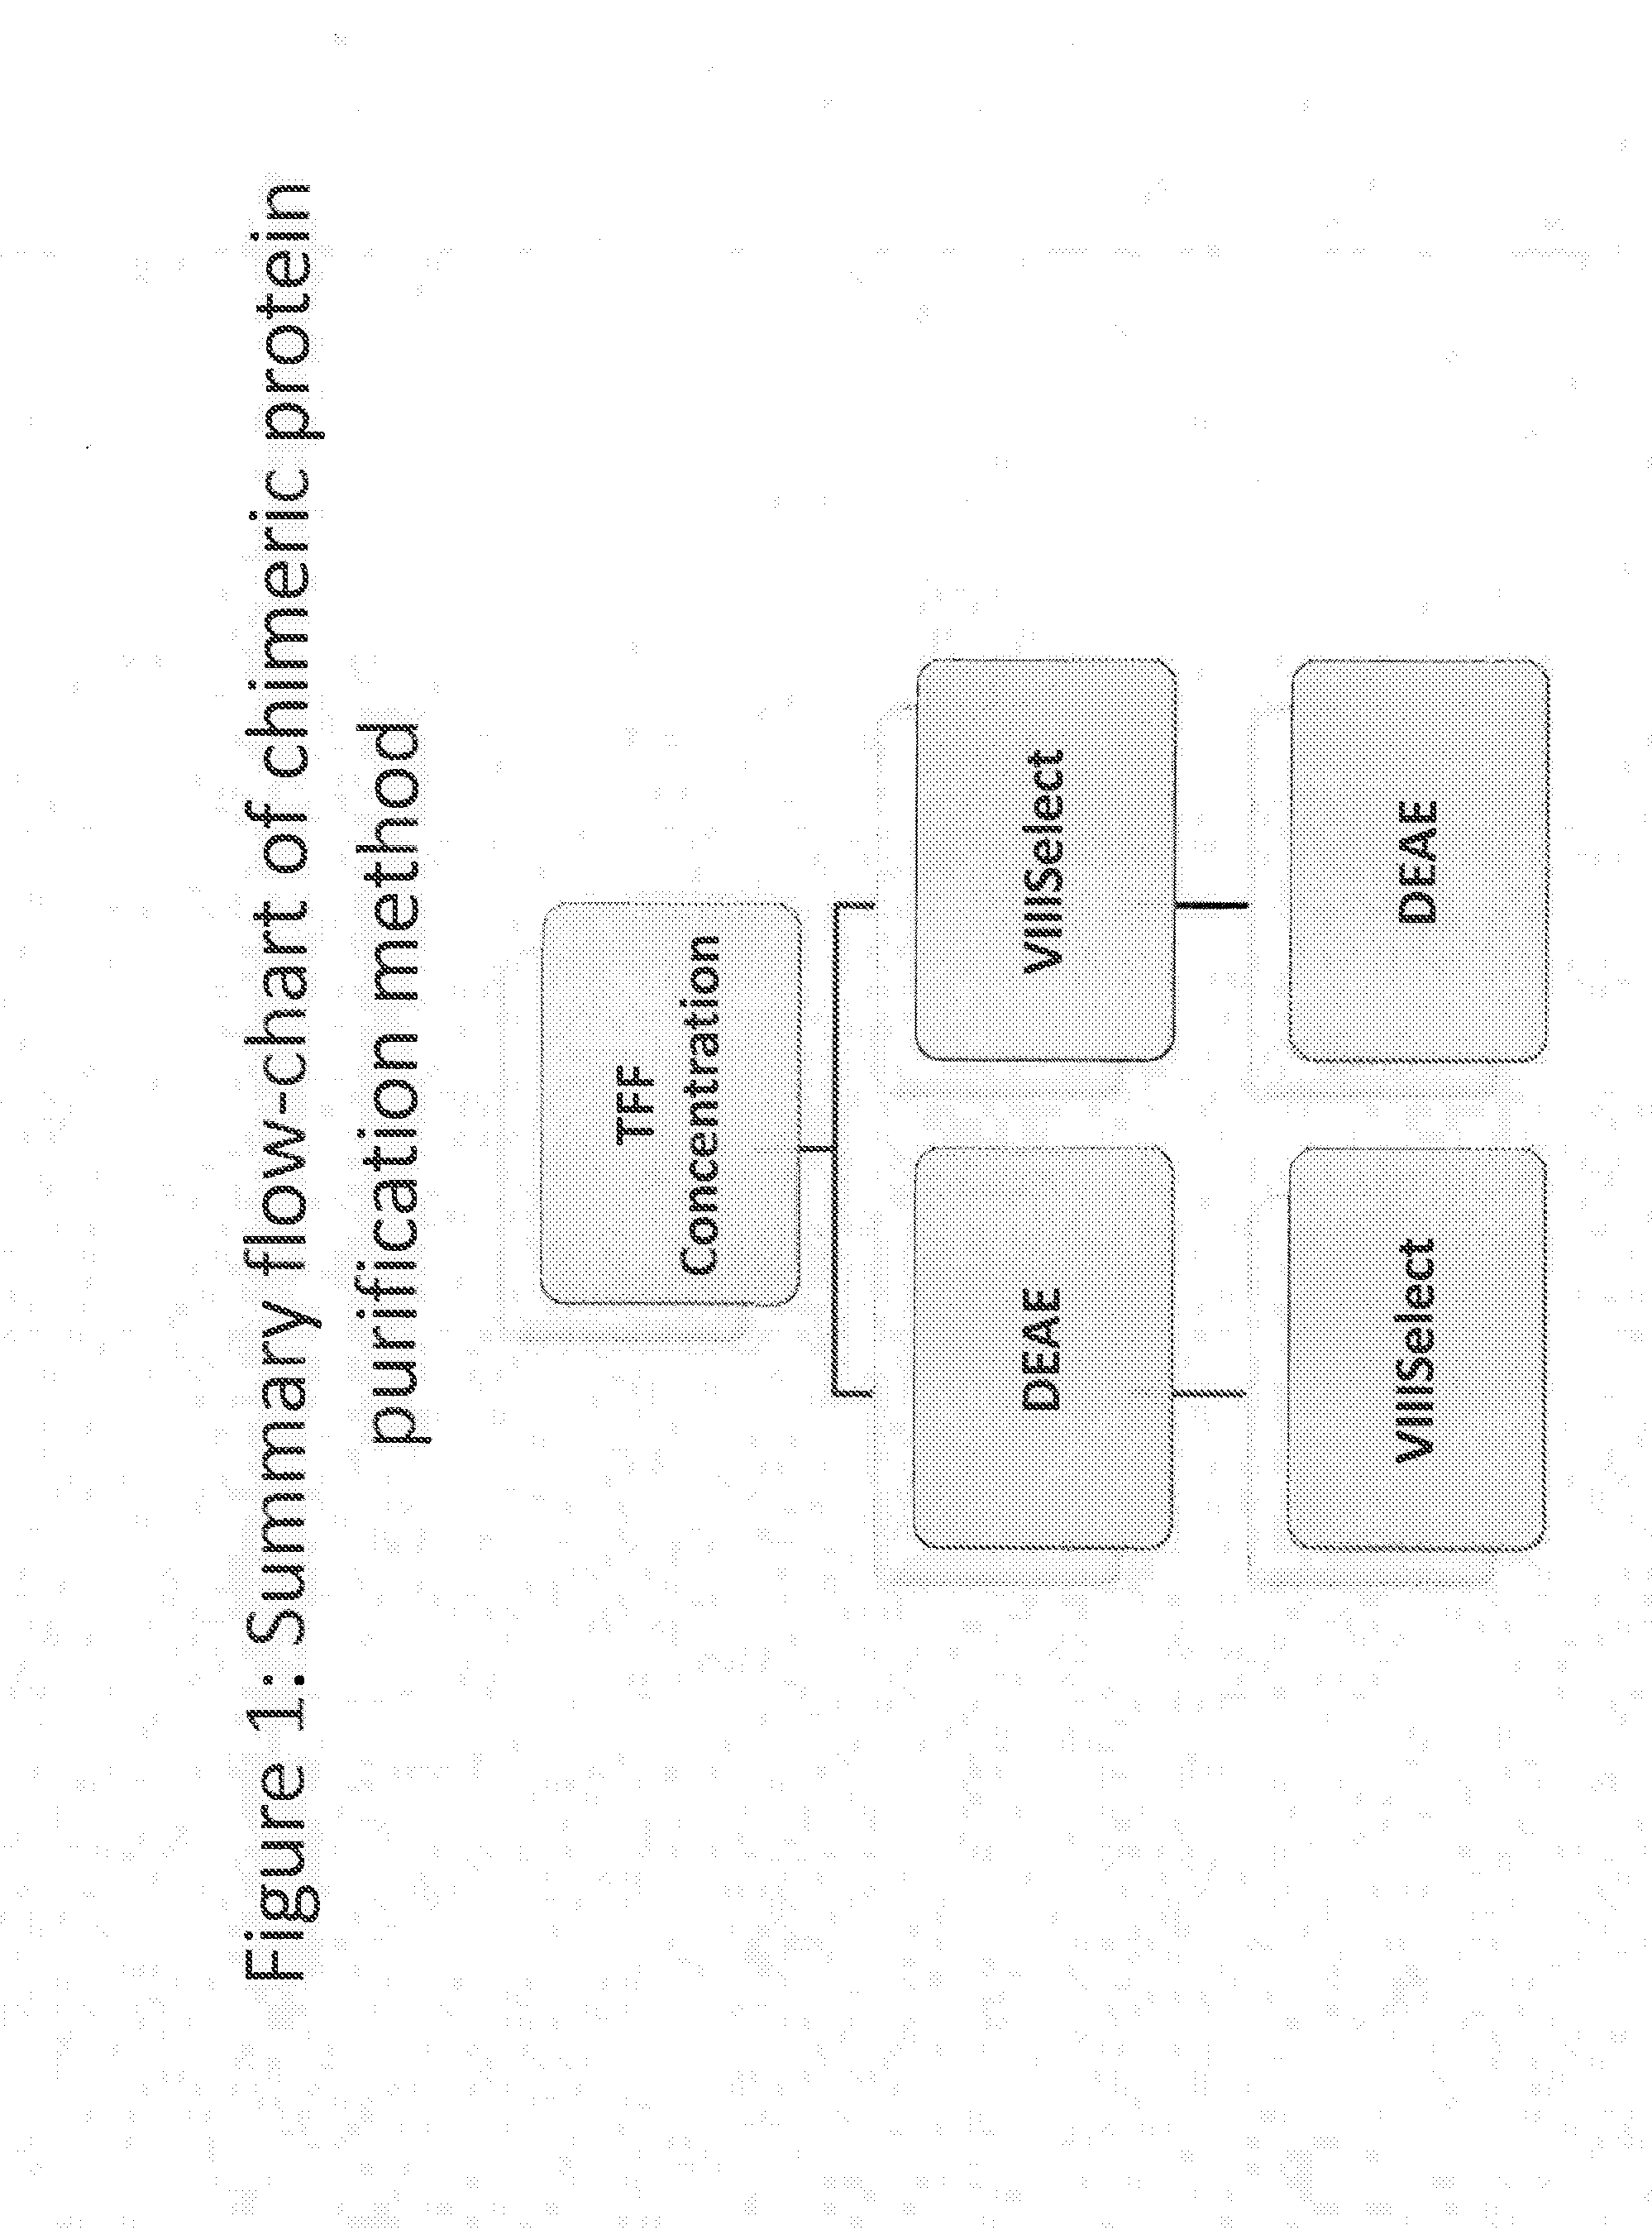 Purification of chimeric fviii molecules